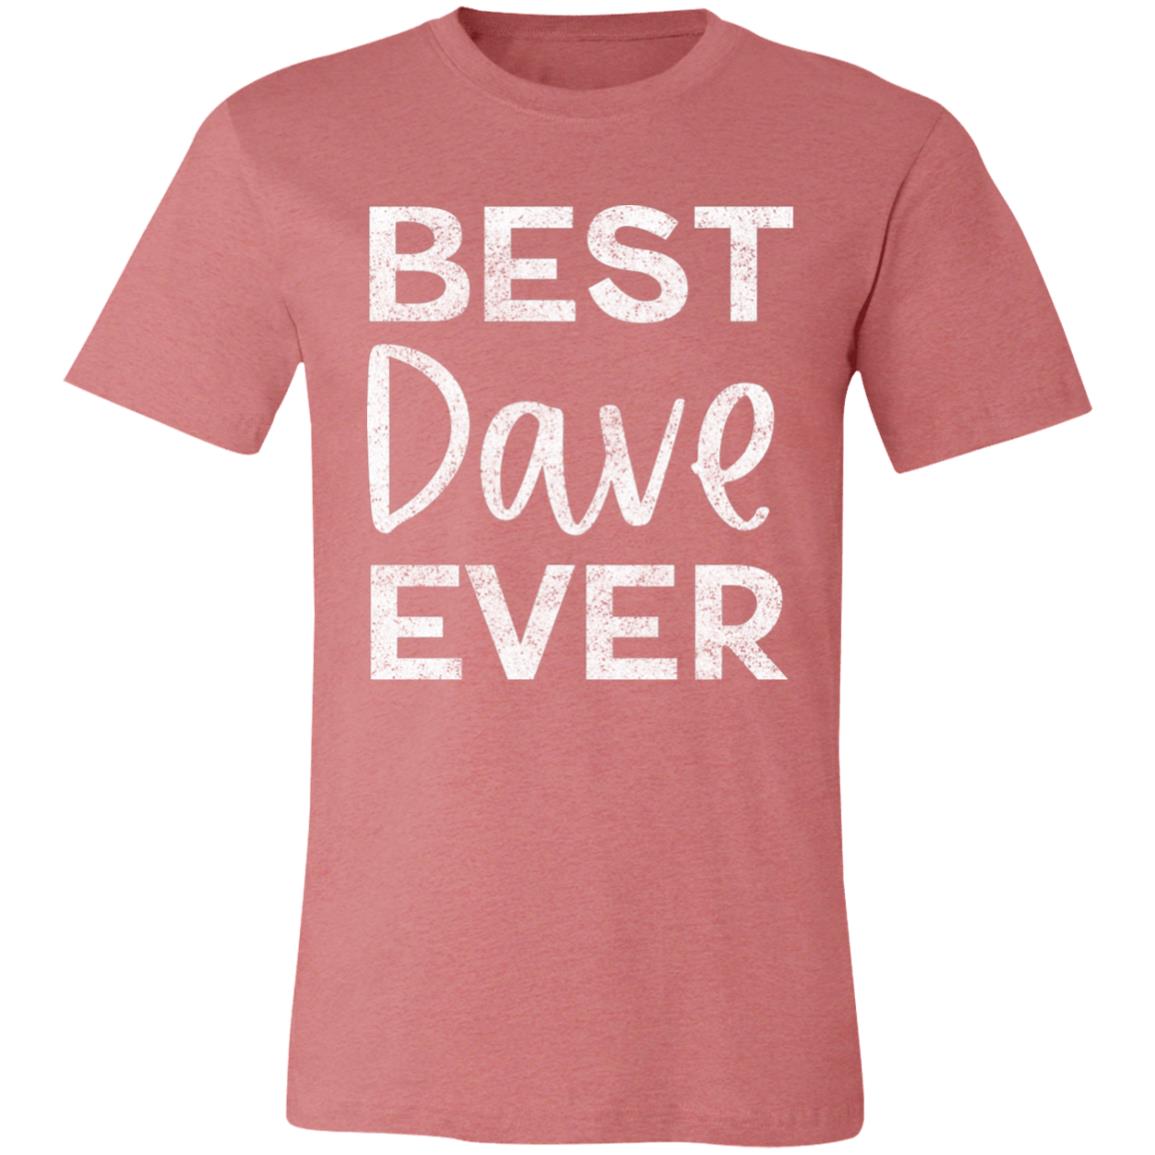 Best Dave Ever | DMB Tee | Unisex Super Soft Premium Graphic T-Shirt